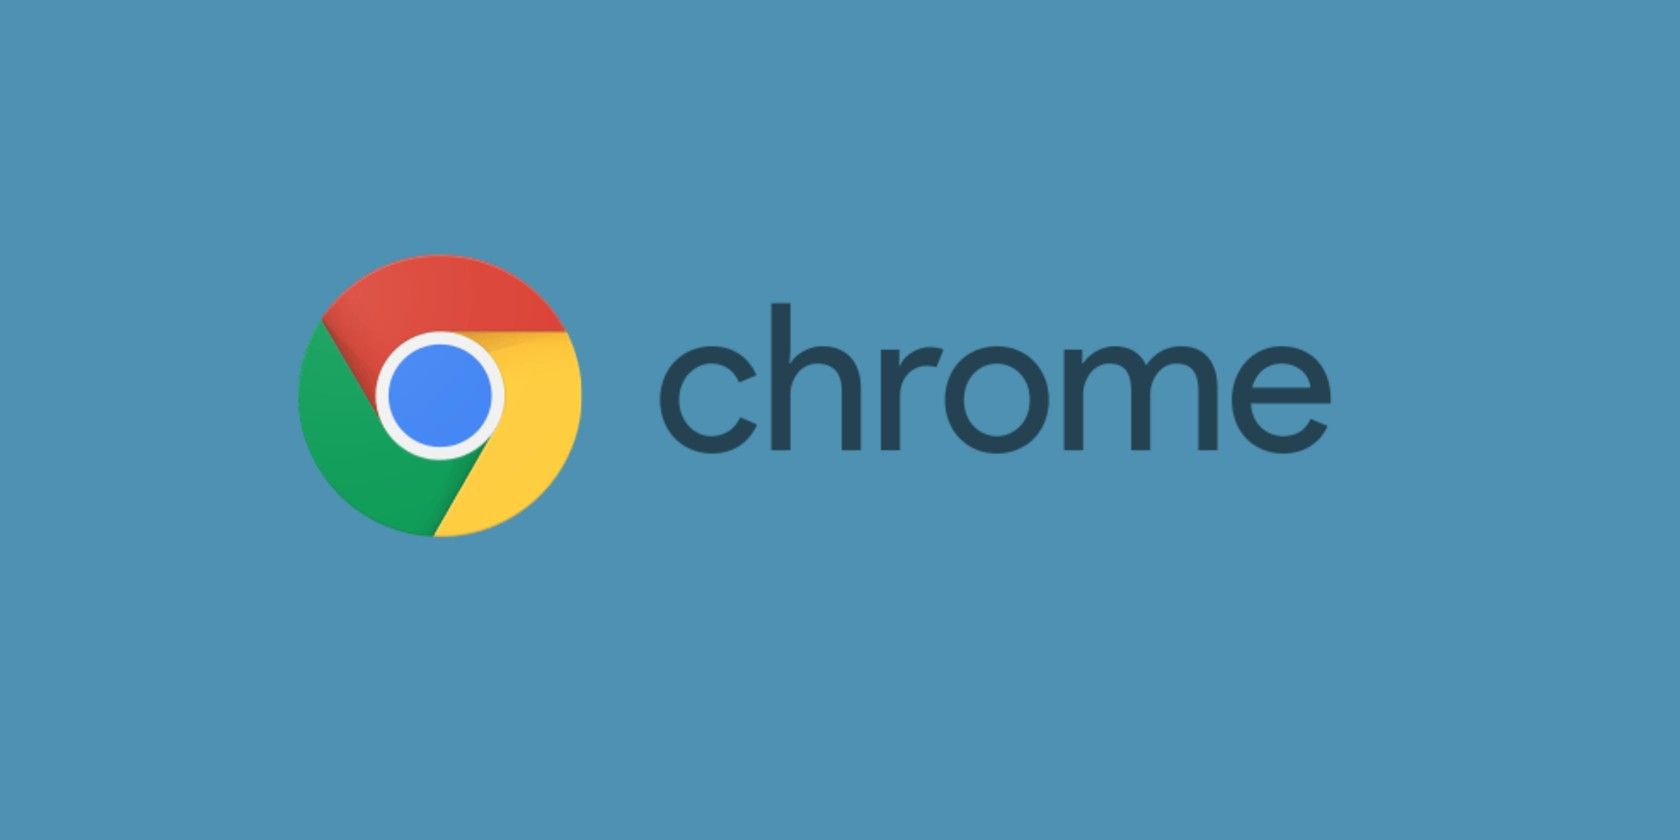 chrome logo feature